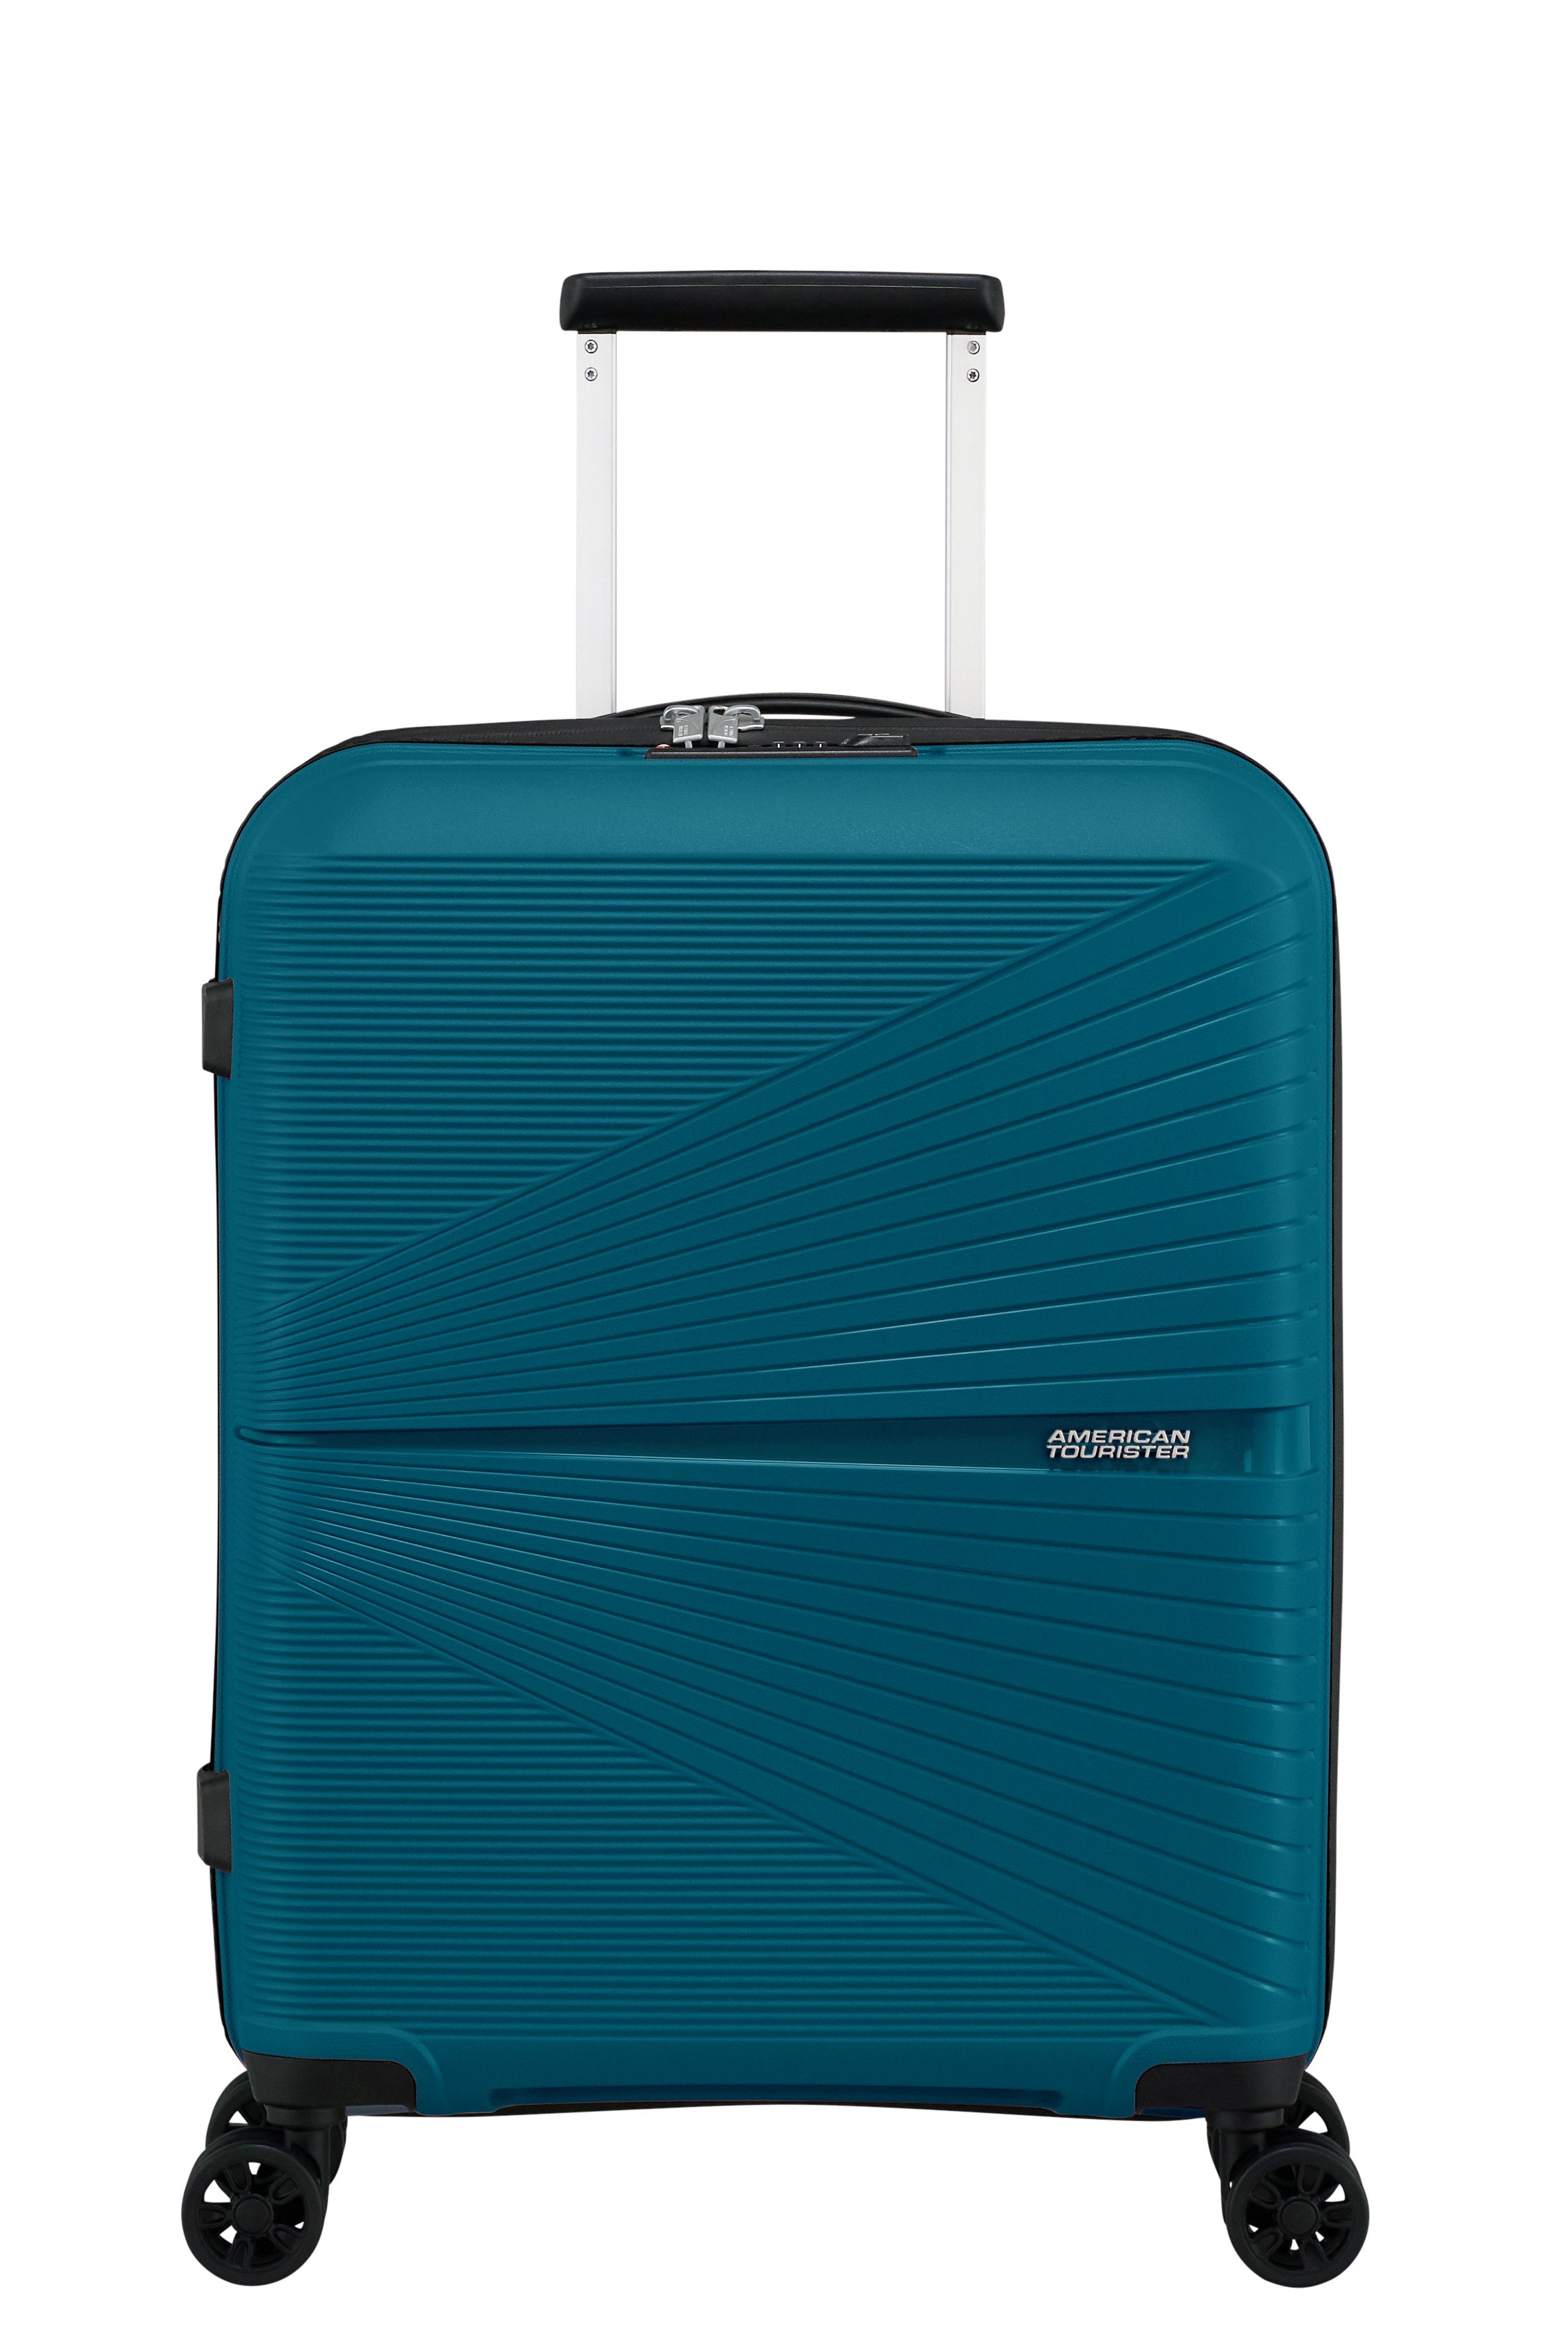 Bags To Go: Best Luggage, Suitcase u0026 Bag Store Australia